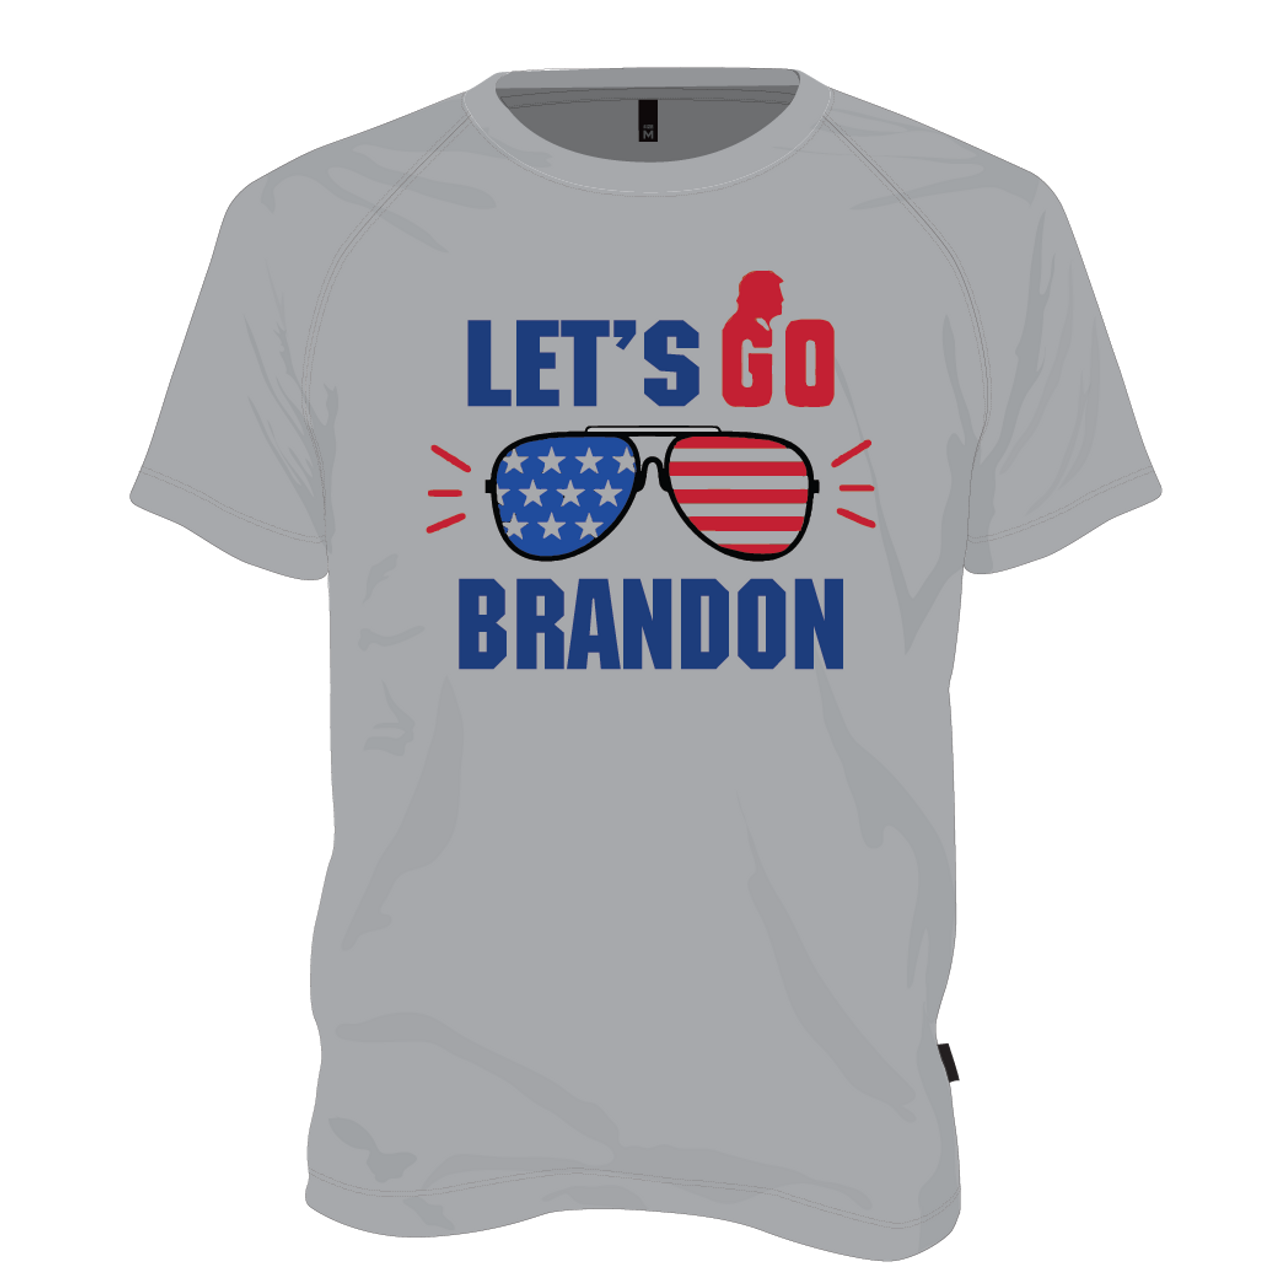 Let's Go Brandon Short Sleeve Dry Fit T Shirt - Gray